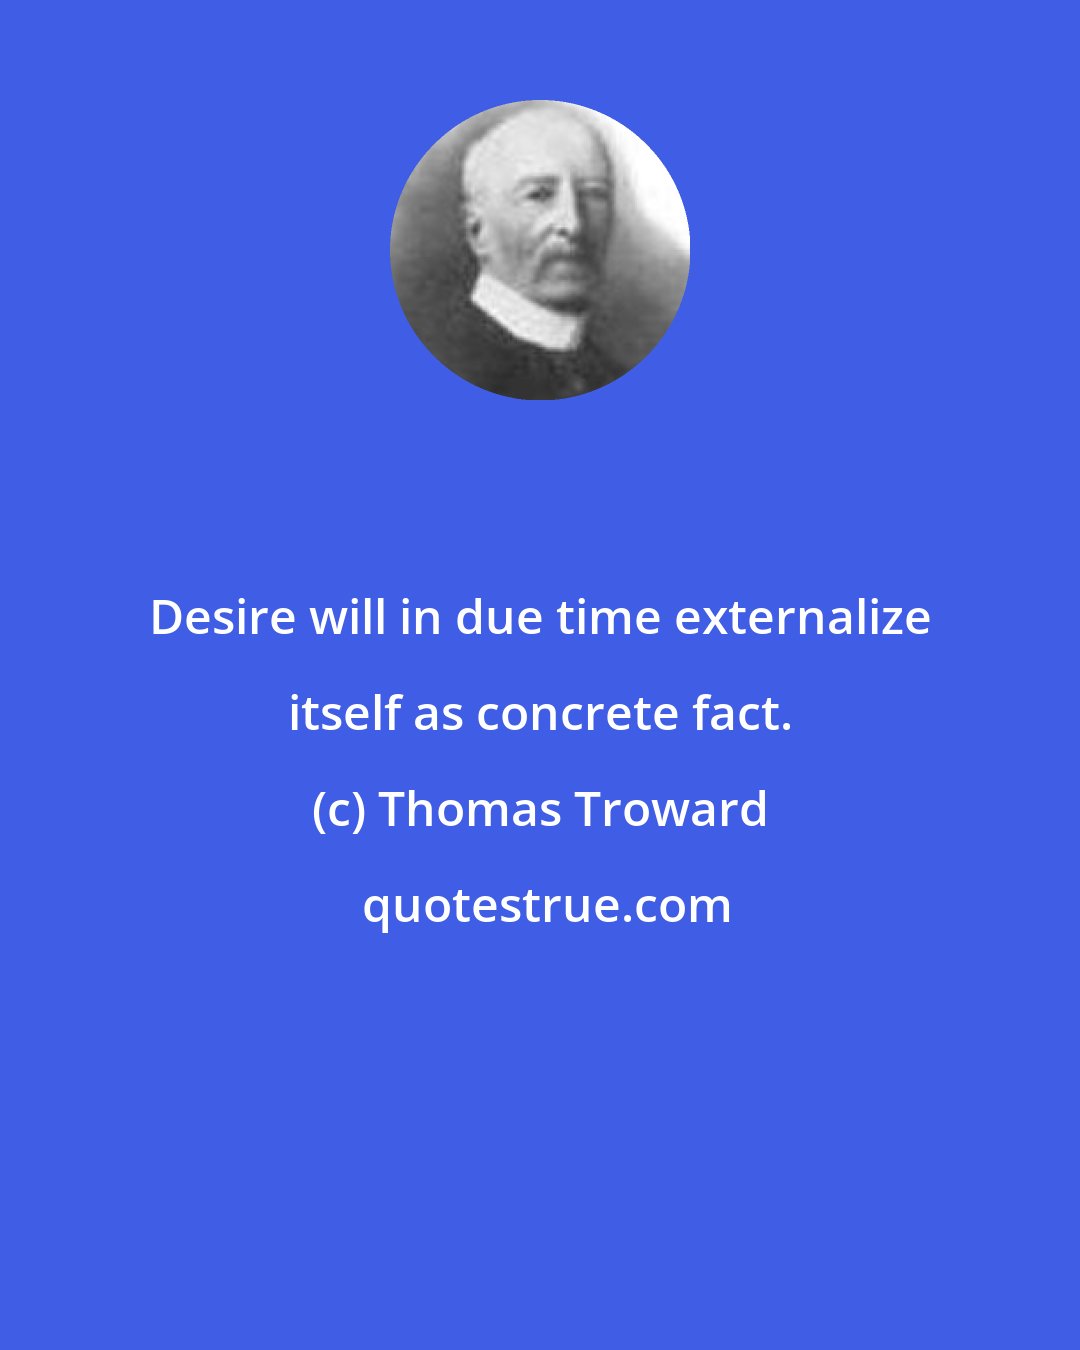 Thomas Troward: Desire will in due time externalize itself as concrete fact.